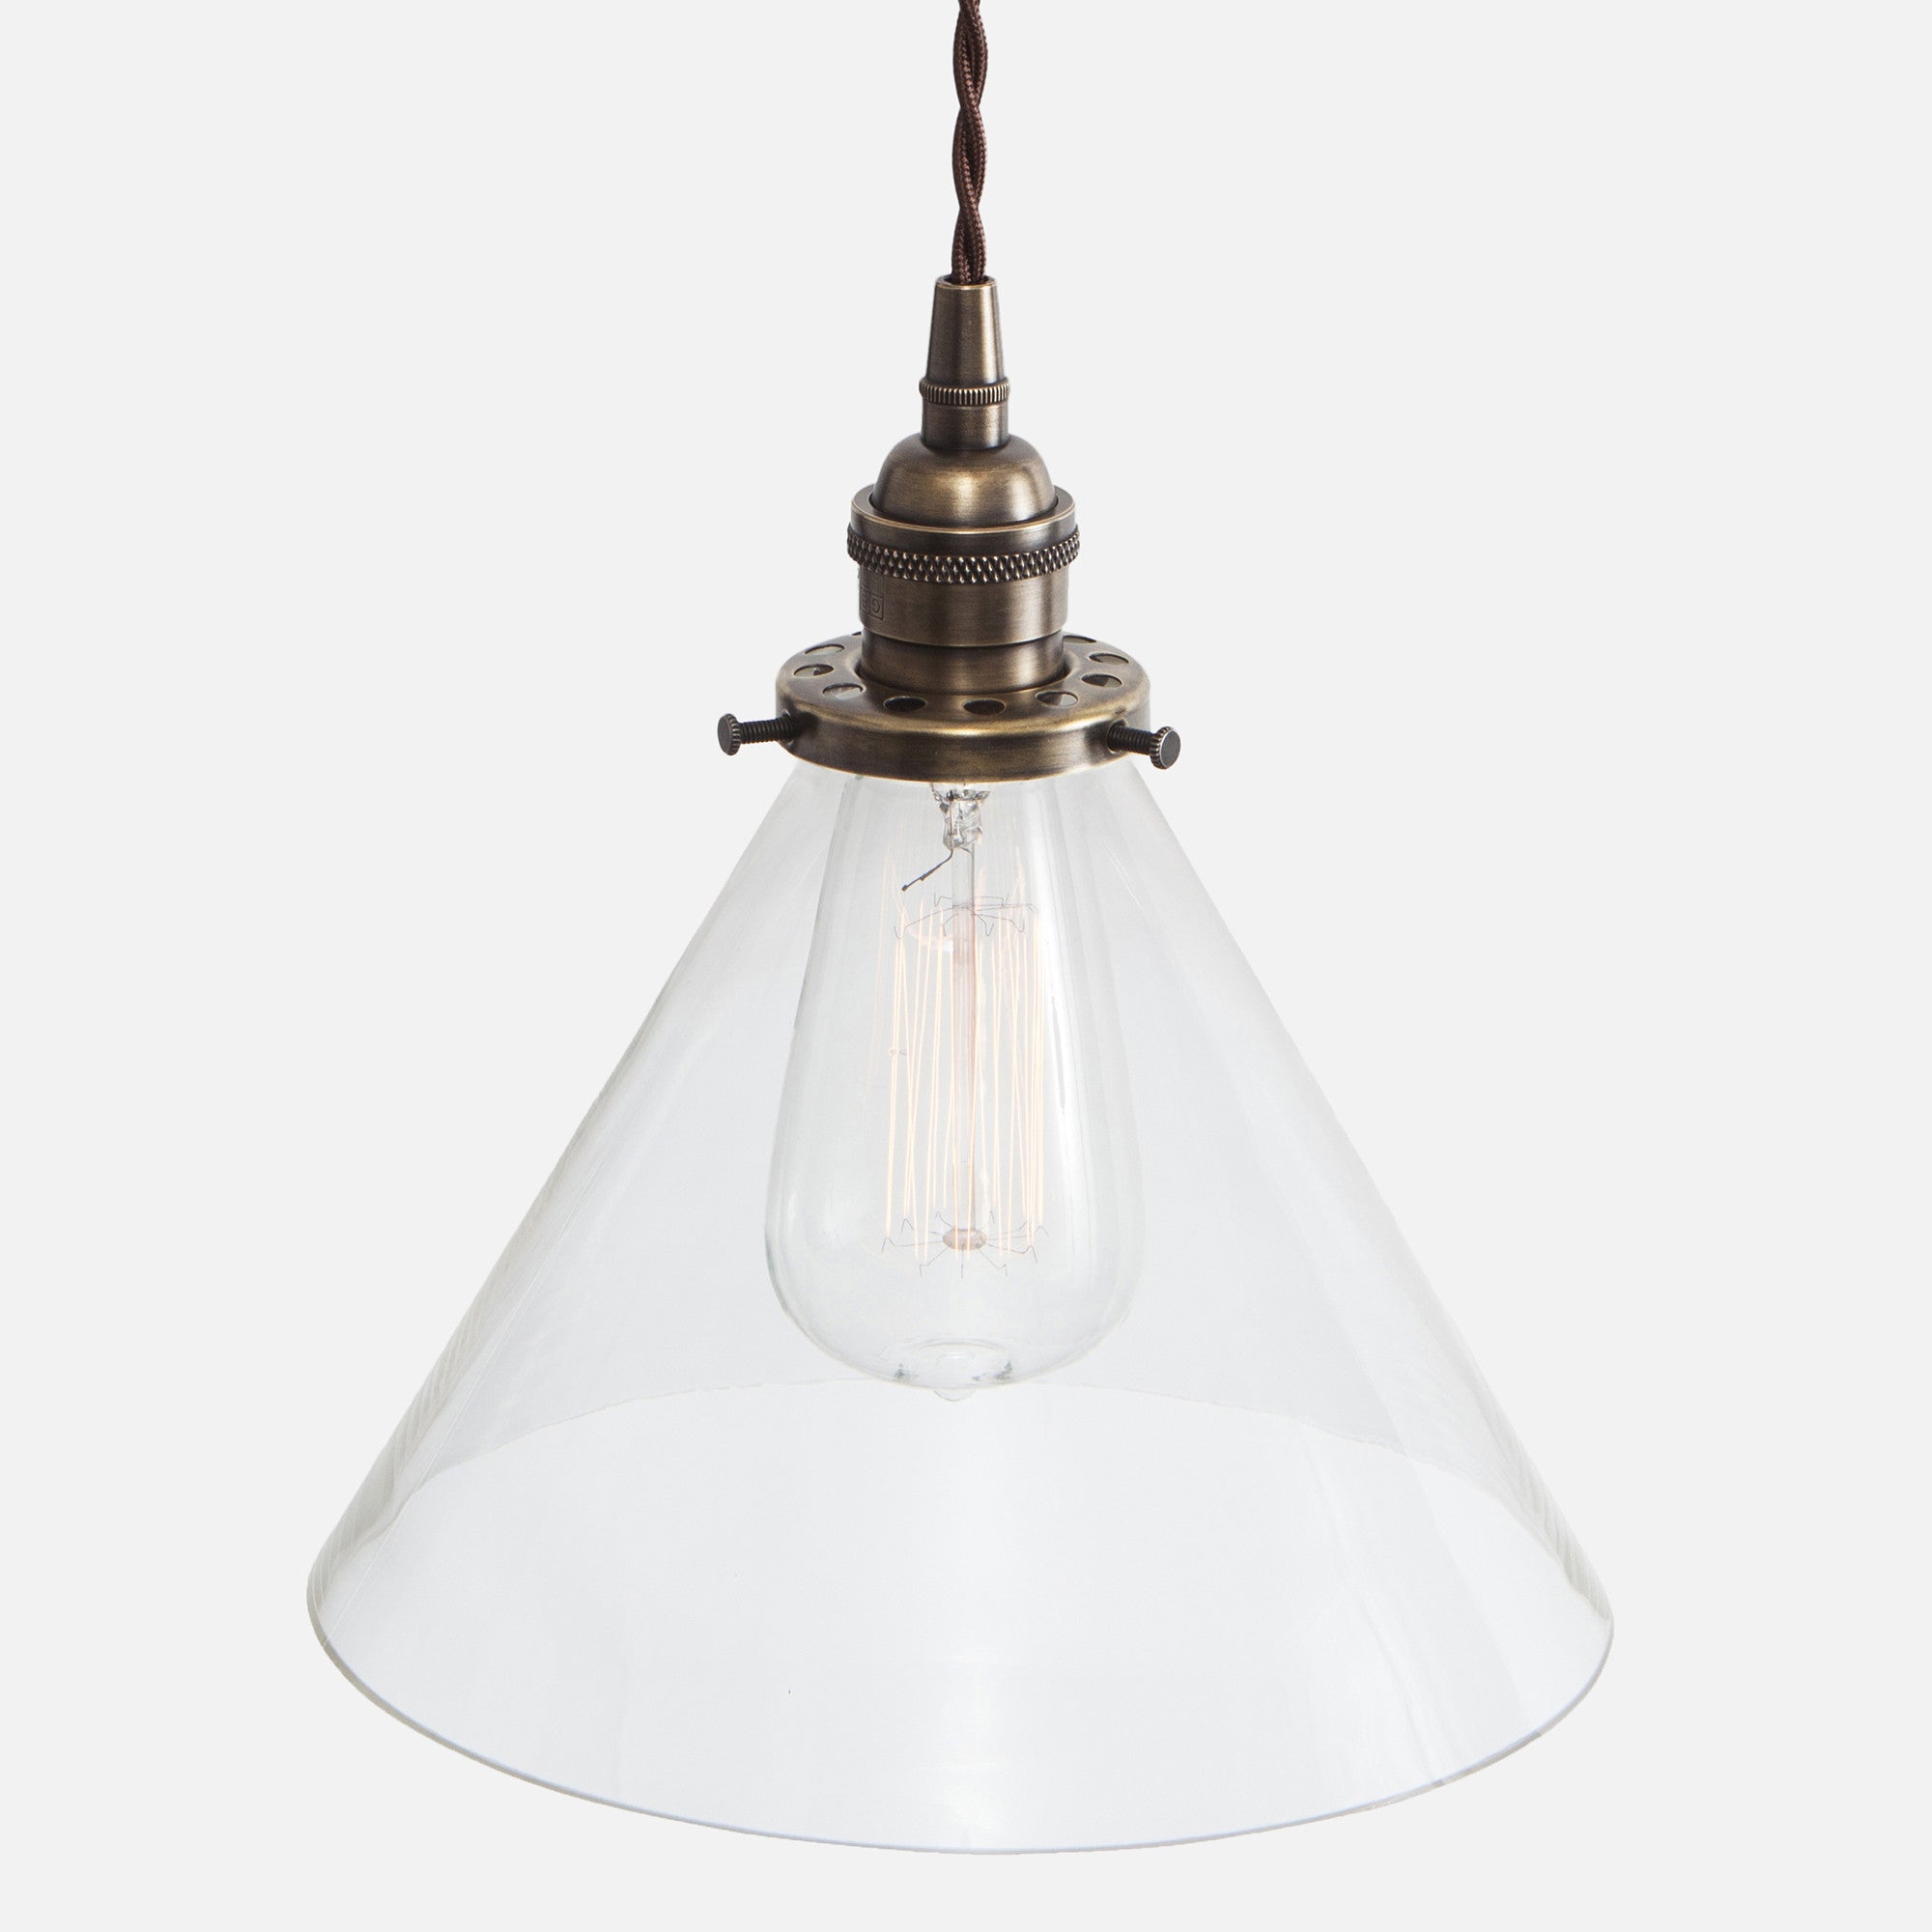 Vintage Socket Pendant Light - Clear Glass Cone Shade - Vintage Brass Patina